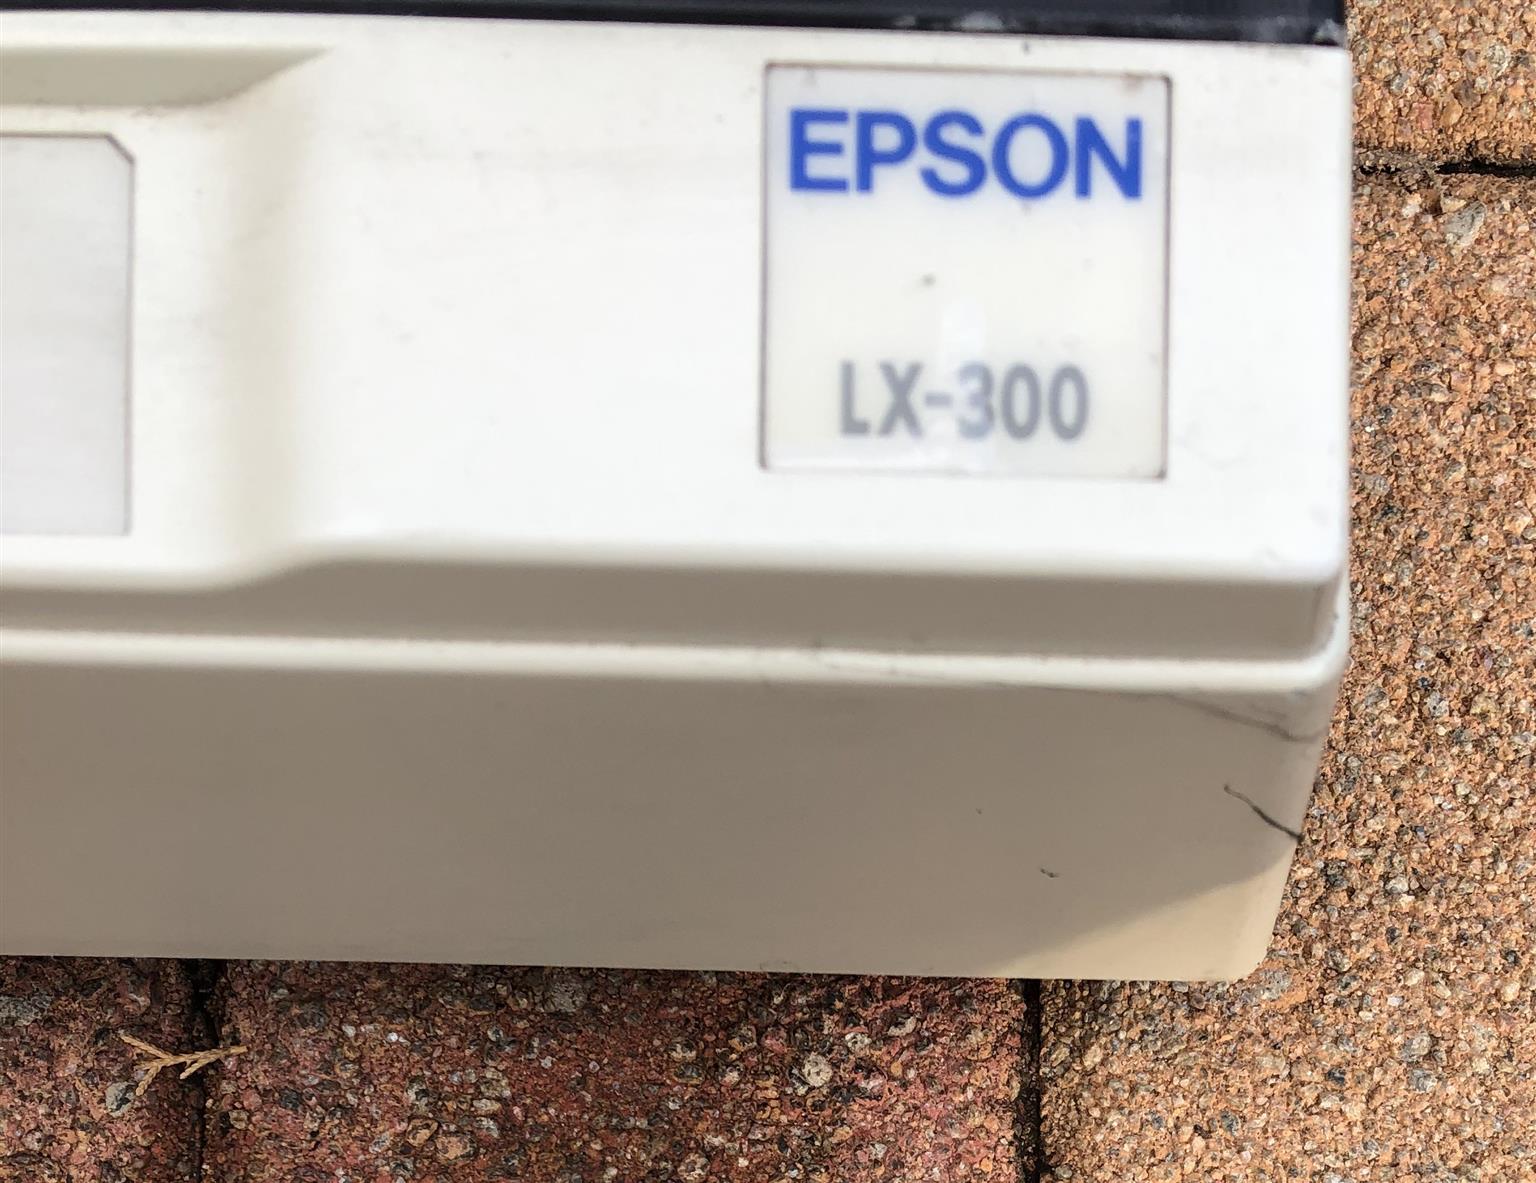 Epson printer LX-300 model P850A